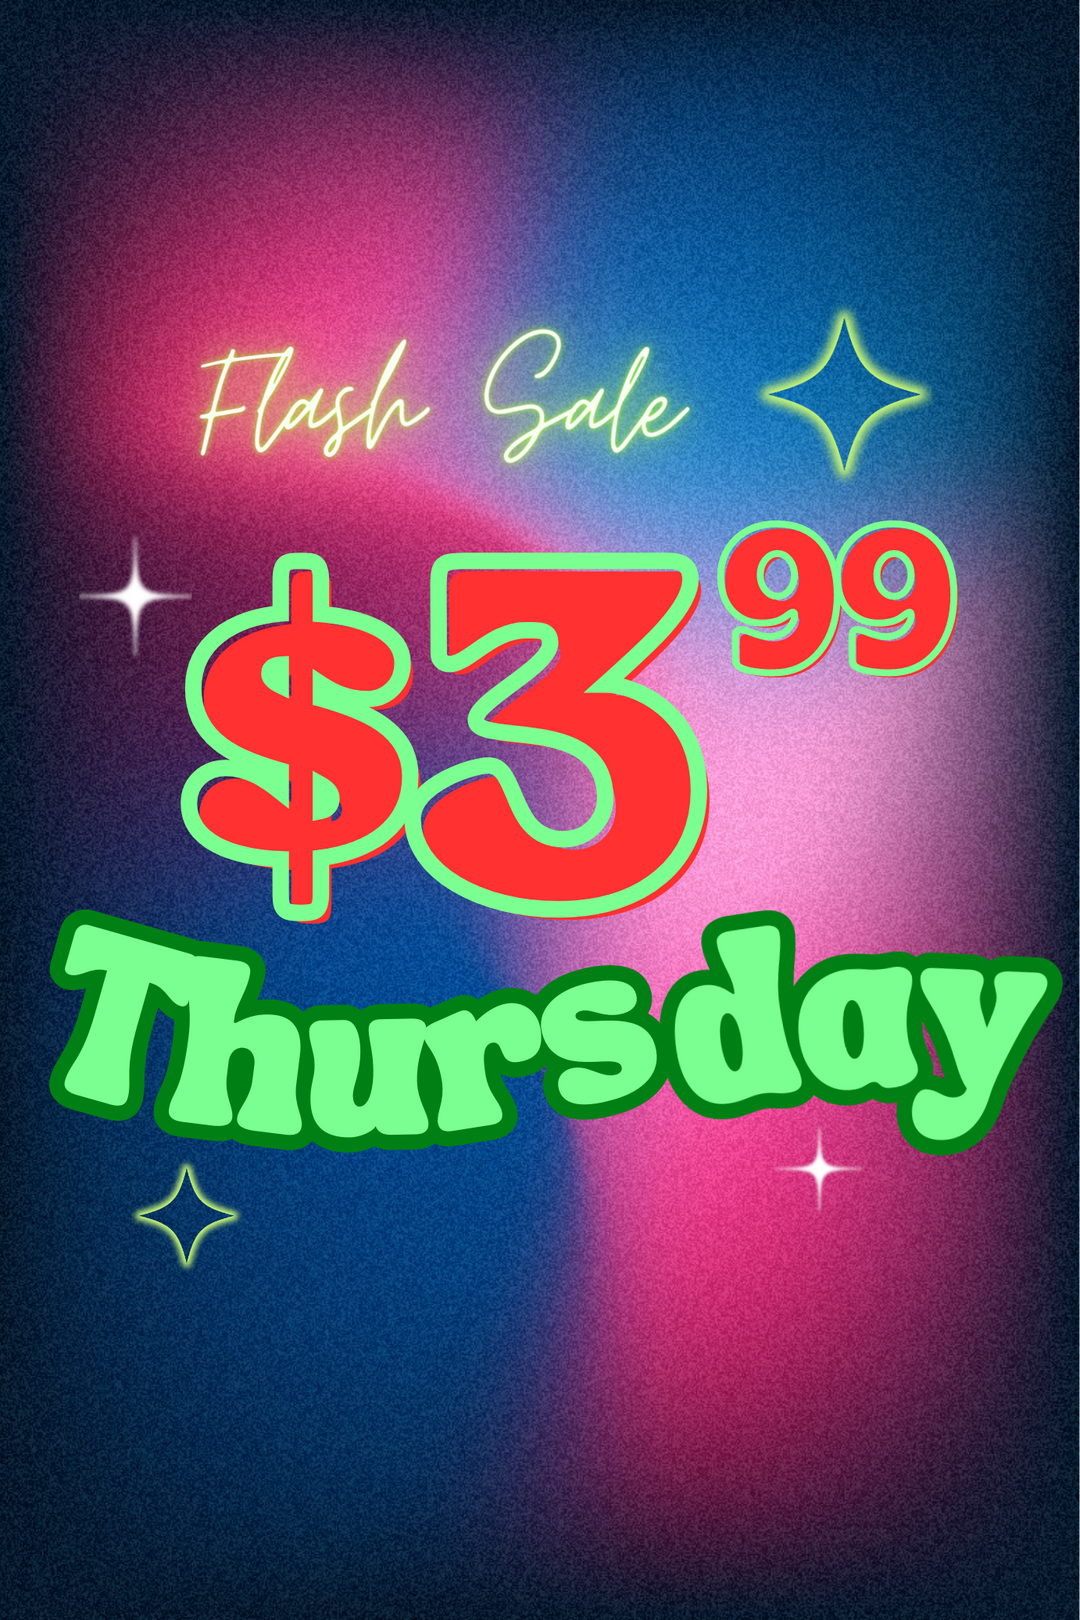 $3 Thursday (pick your treat)